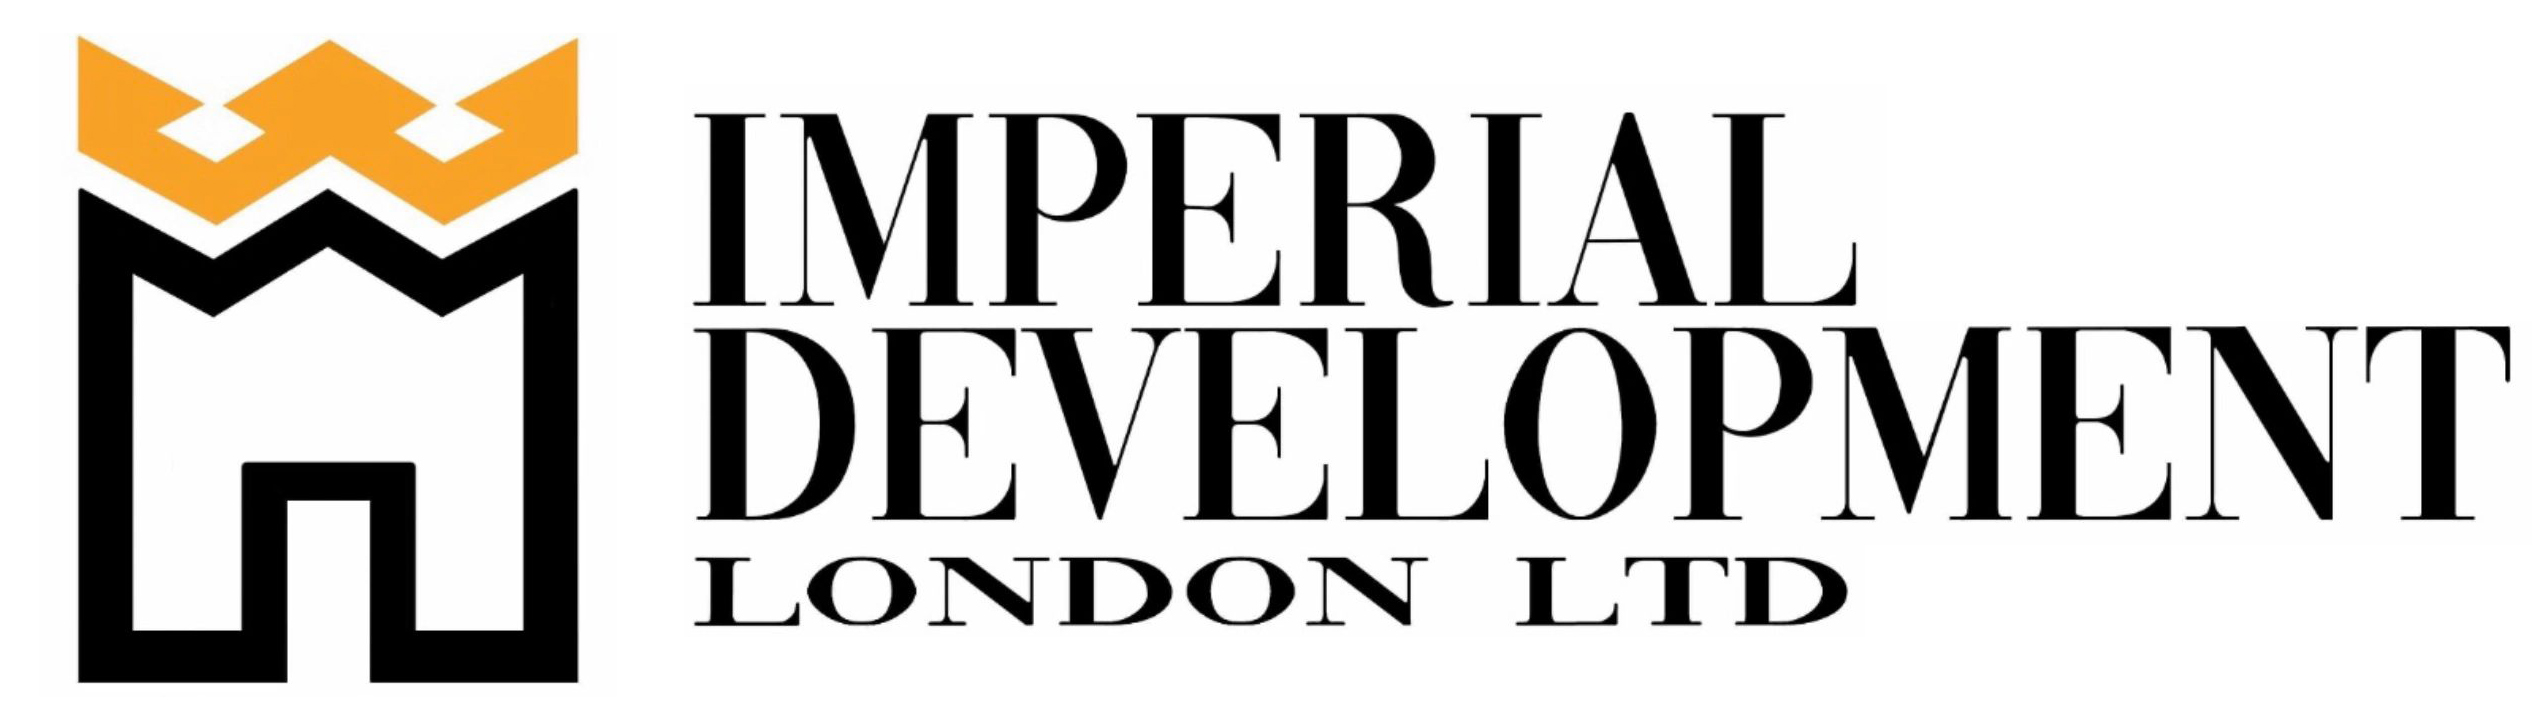 Imperial Development London LTD